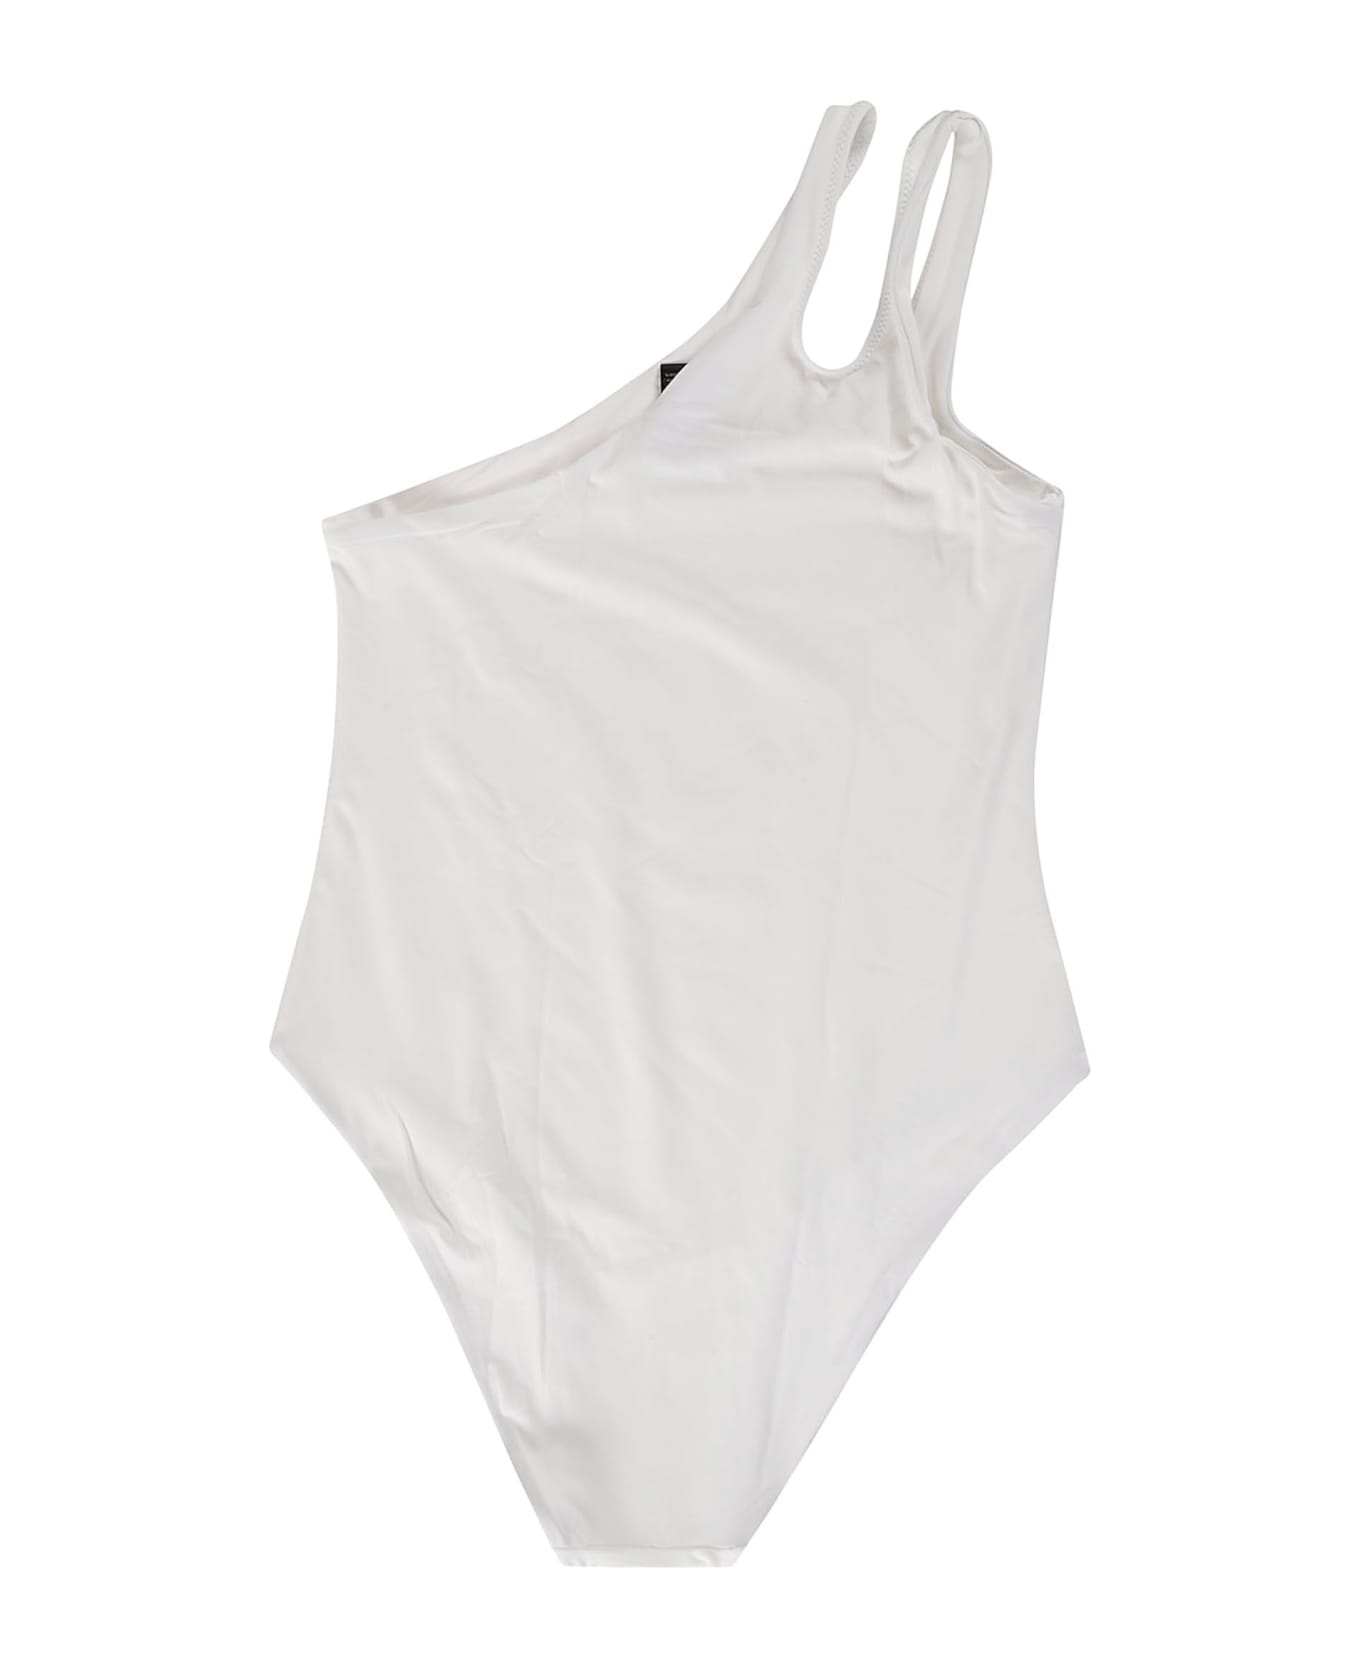 Federica Tosi Slim Fit Plain Swimsuit - White